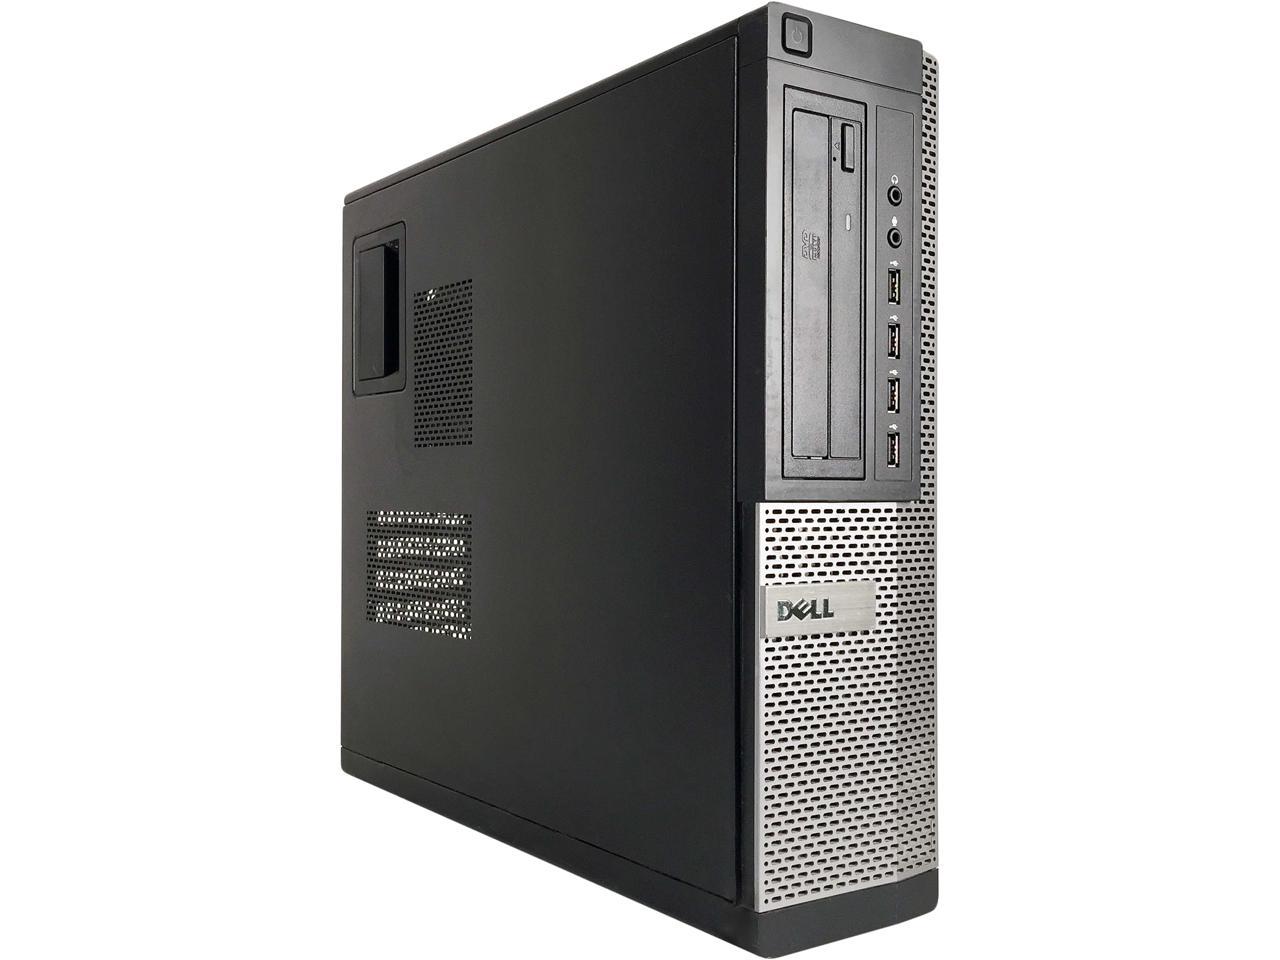 Dell Grade A OptiPlex 790 Desktop Computer, Intel Core i7 2600 (3.40 GHz), 16GB DDR3, 360G SSD, DVD, USB WIFI Adapter, USB Bluetooth Adapter, Windows 10 Home 64-bit Multi-language